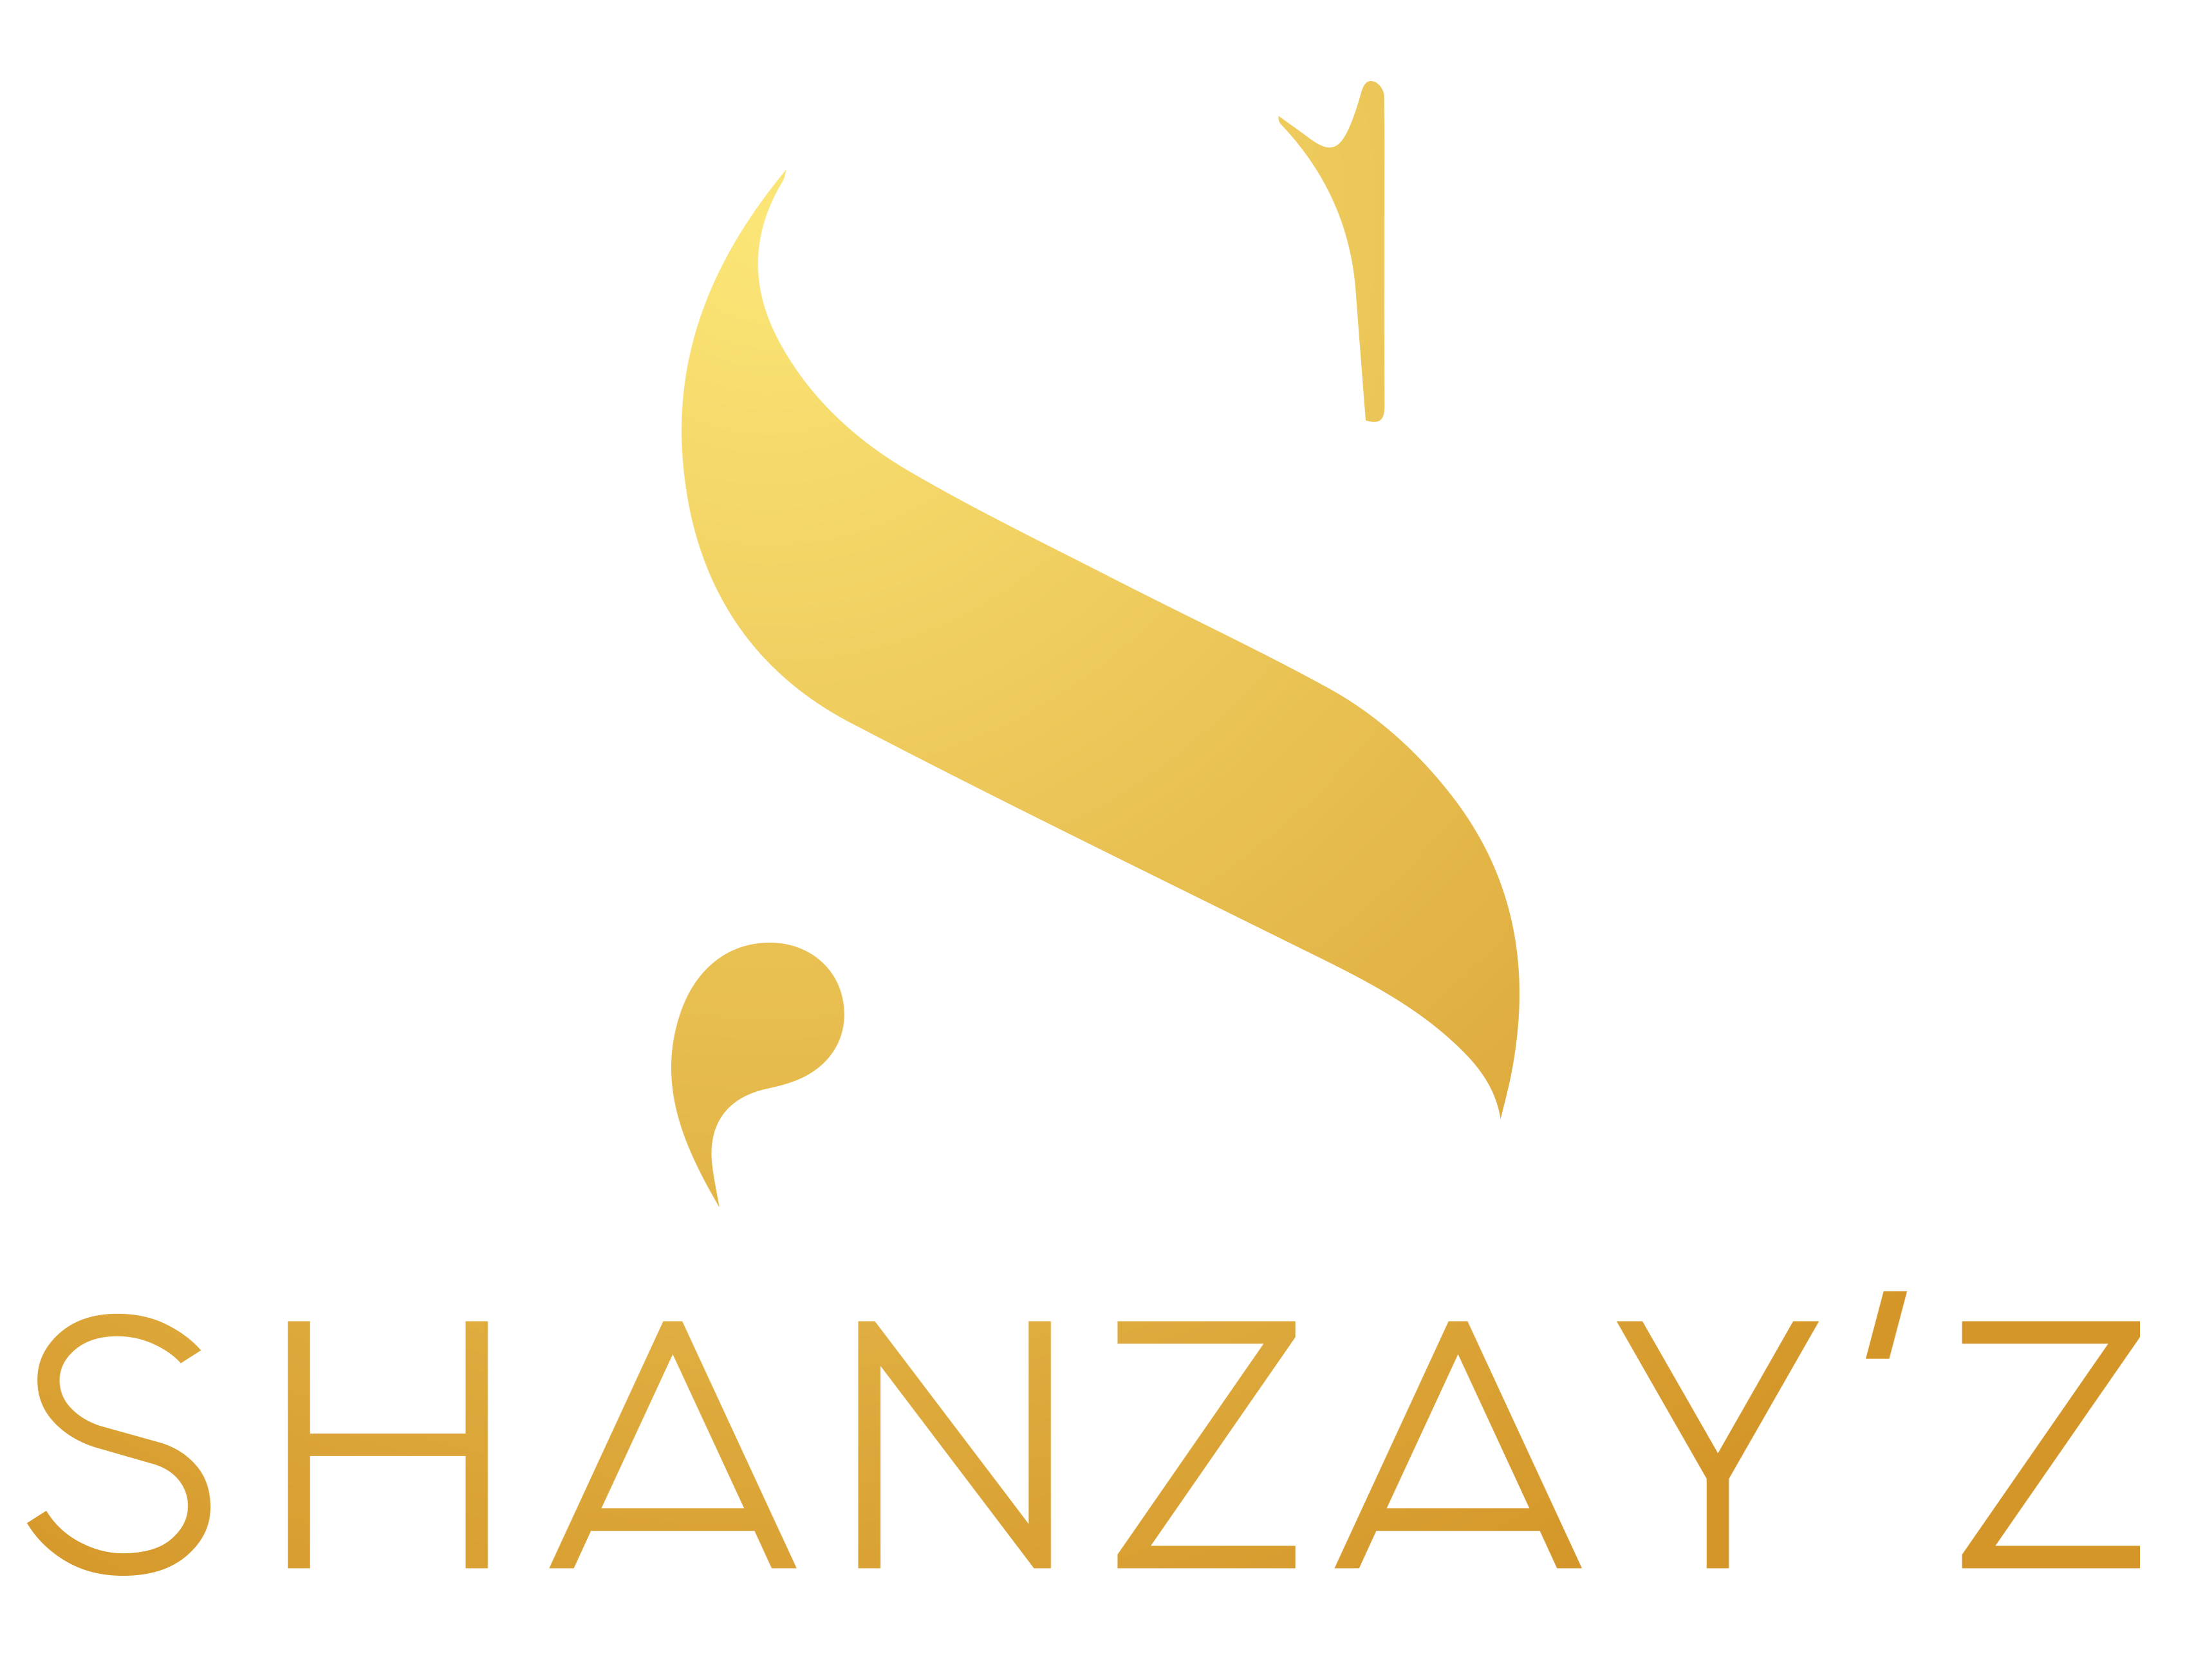 Shanzayzpk